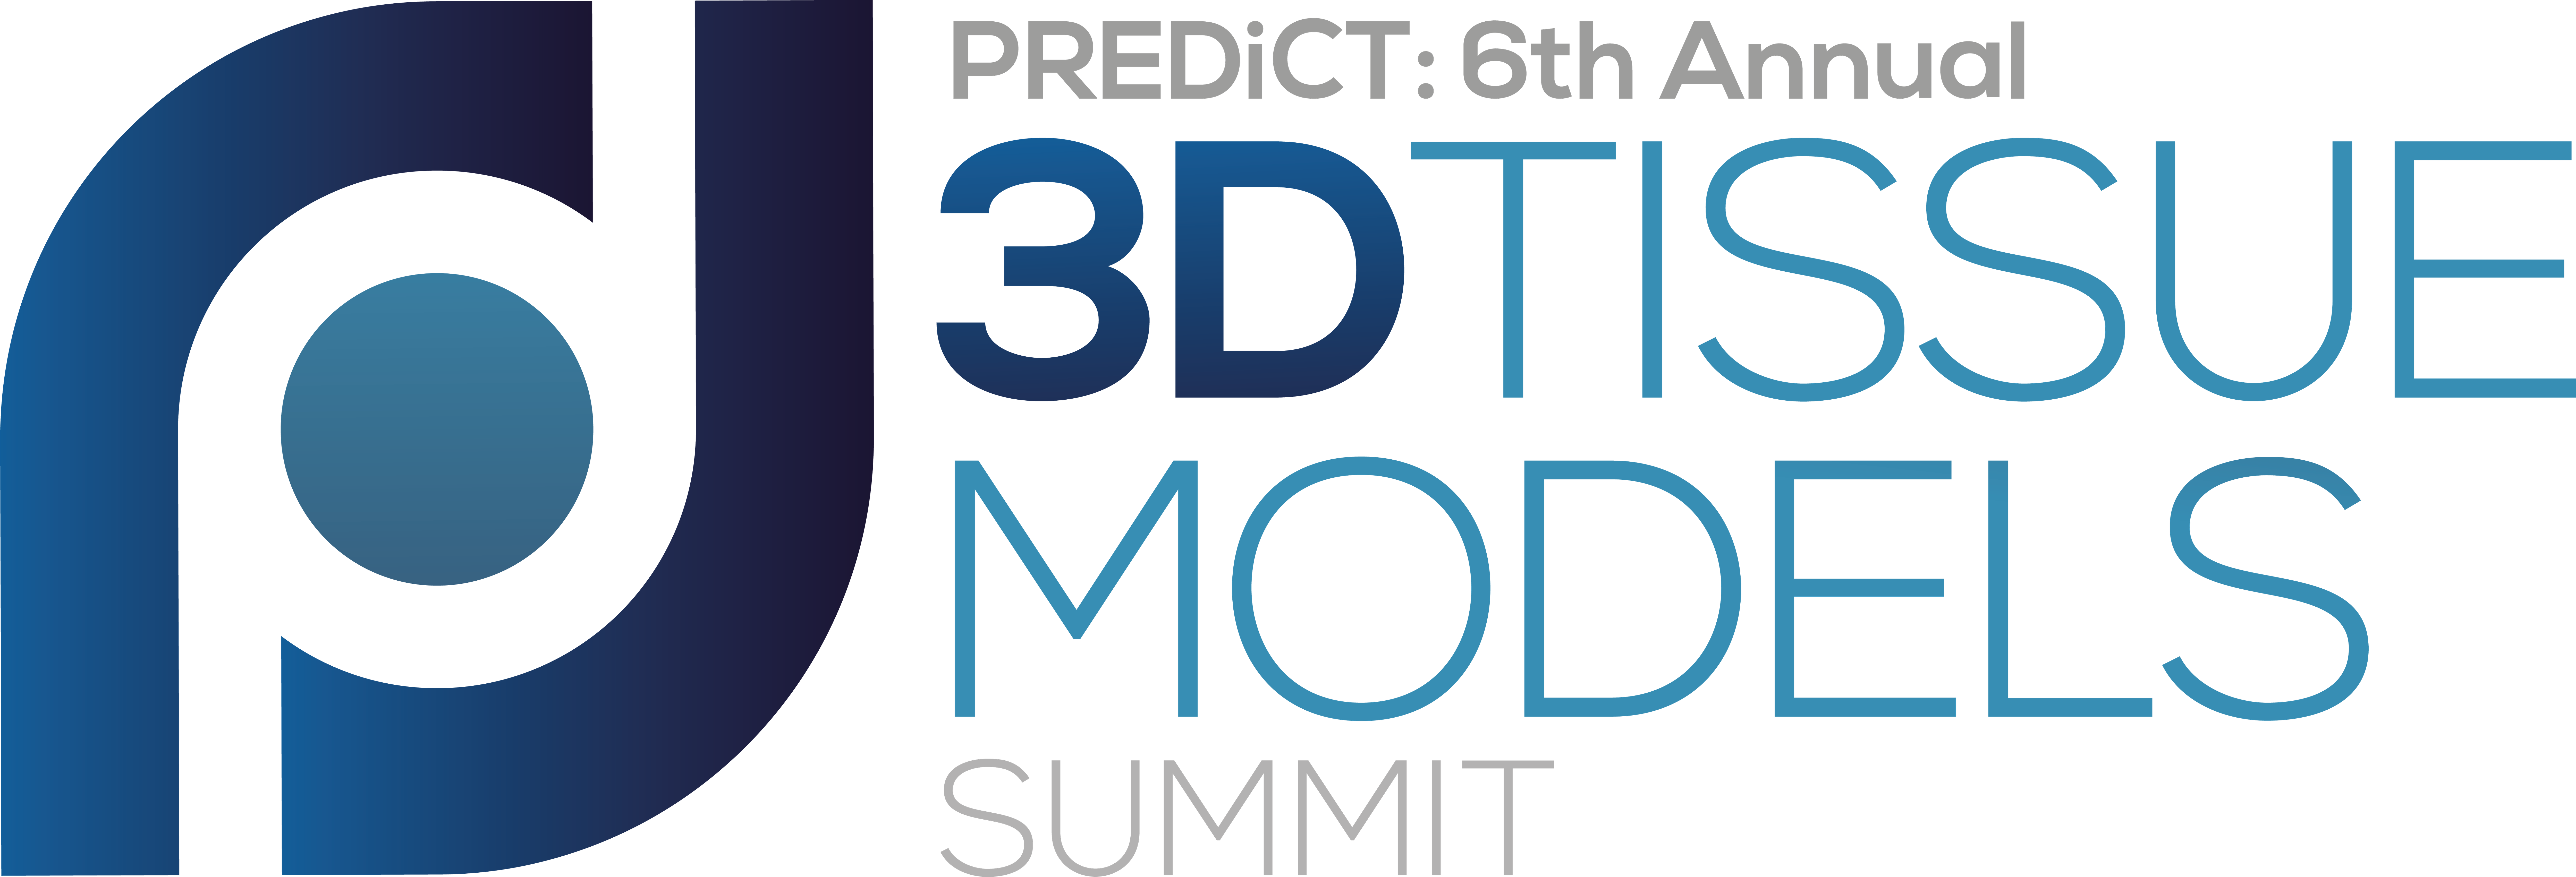 20326 - 3D Tissue Models Summit